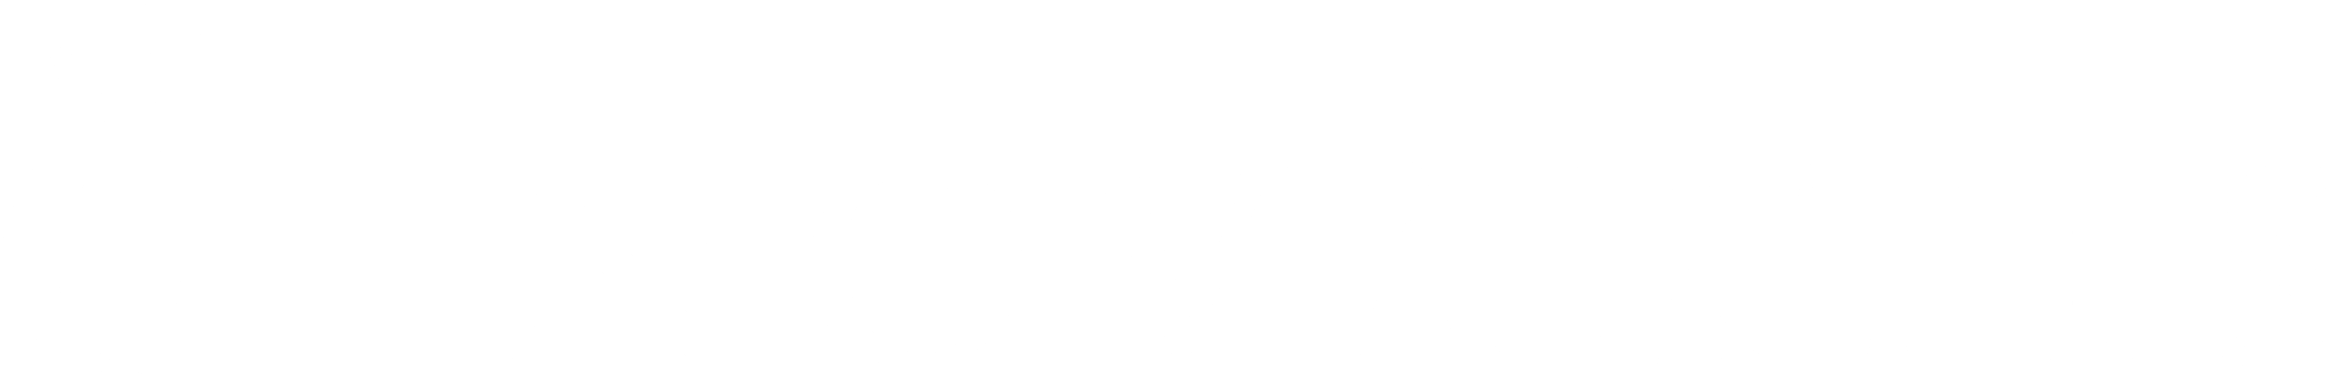 Novartis Logo Black And White - Fortnite Logo Transparent White (2400x2400), Png Download